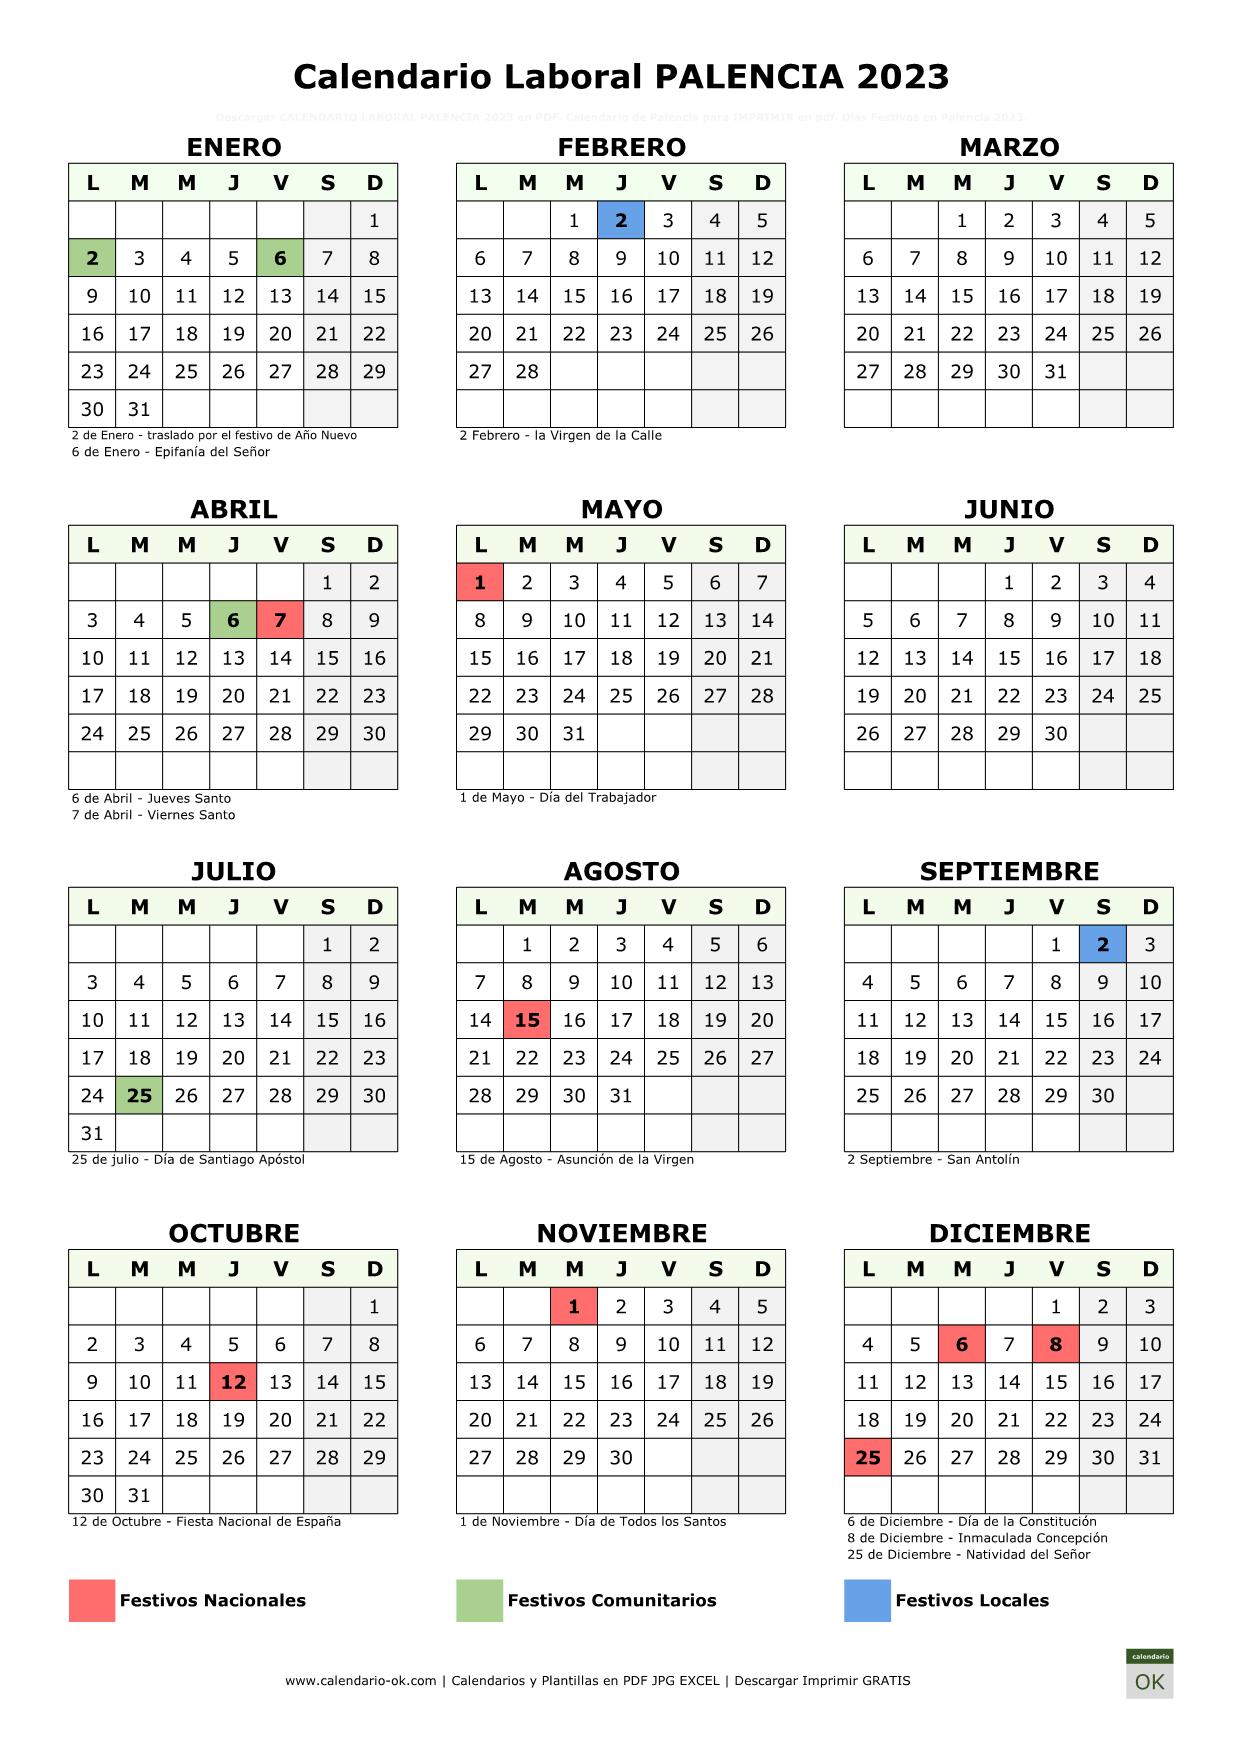 Calendario Laboral Palencia 2023